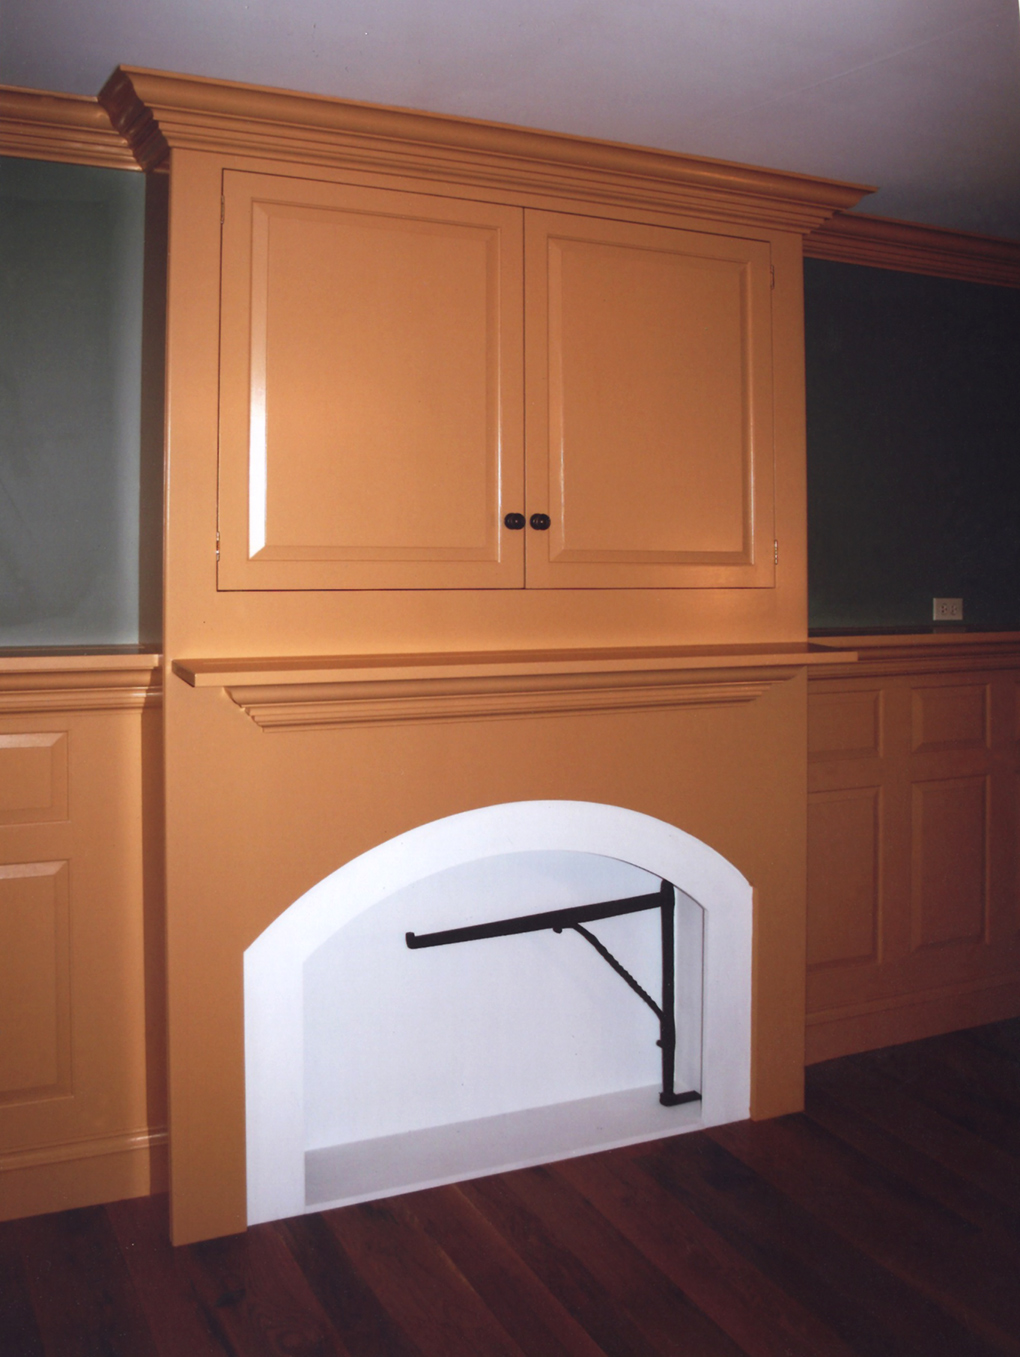 Custom built-in cabinetry